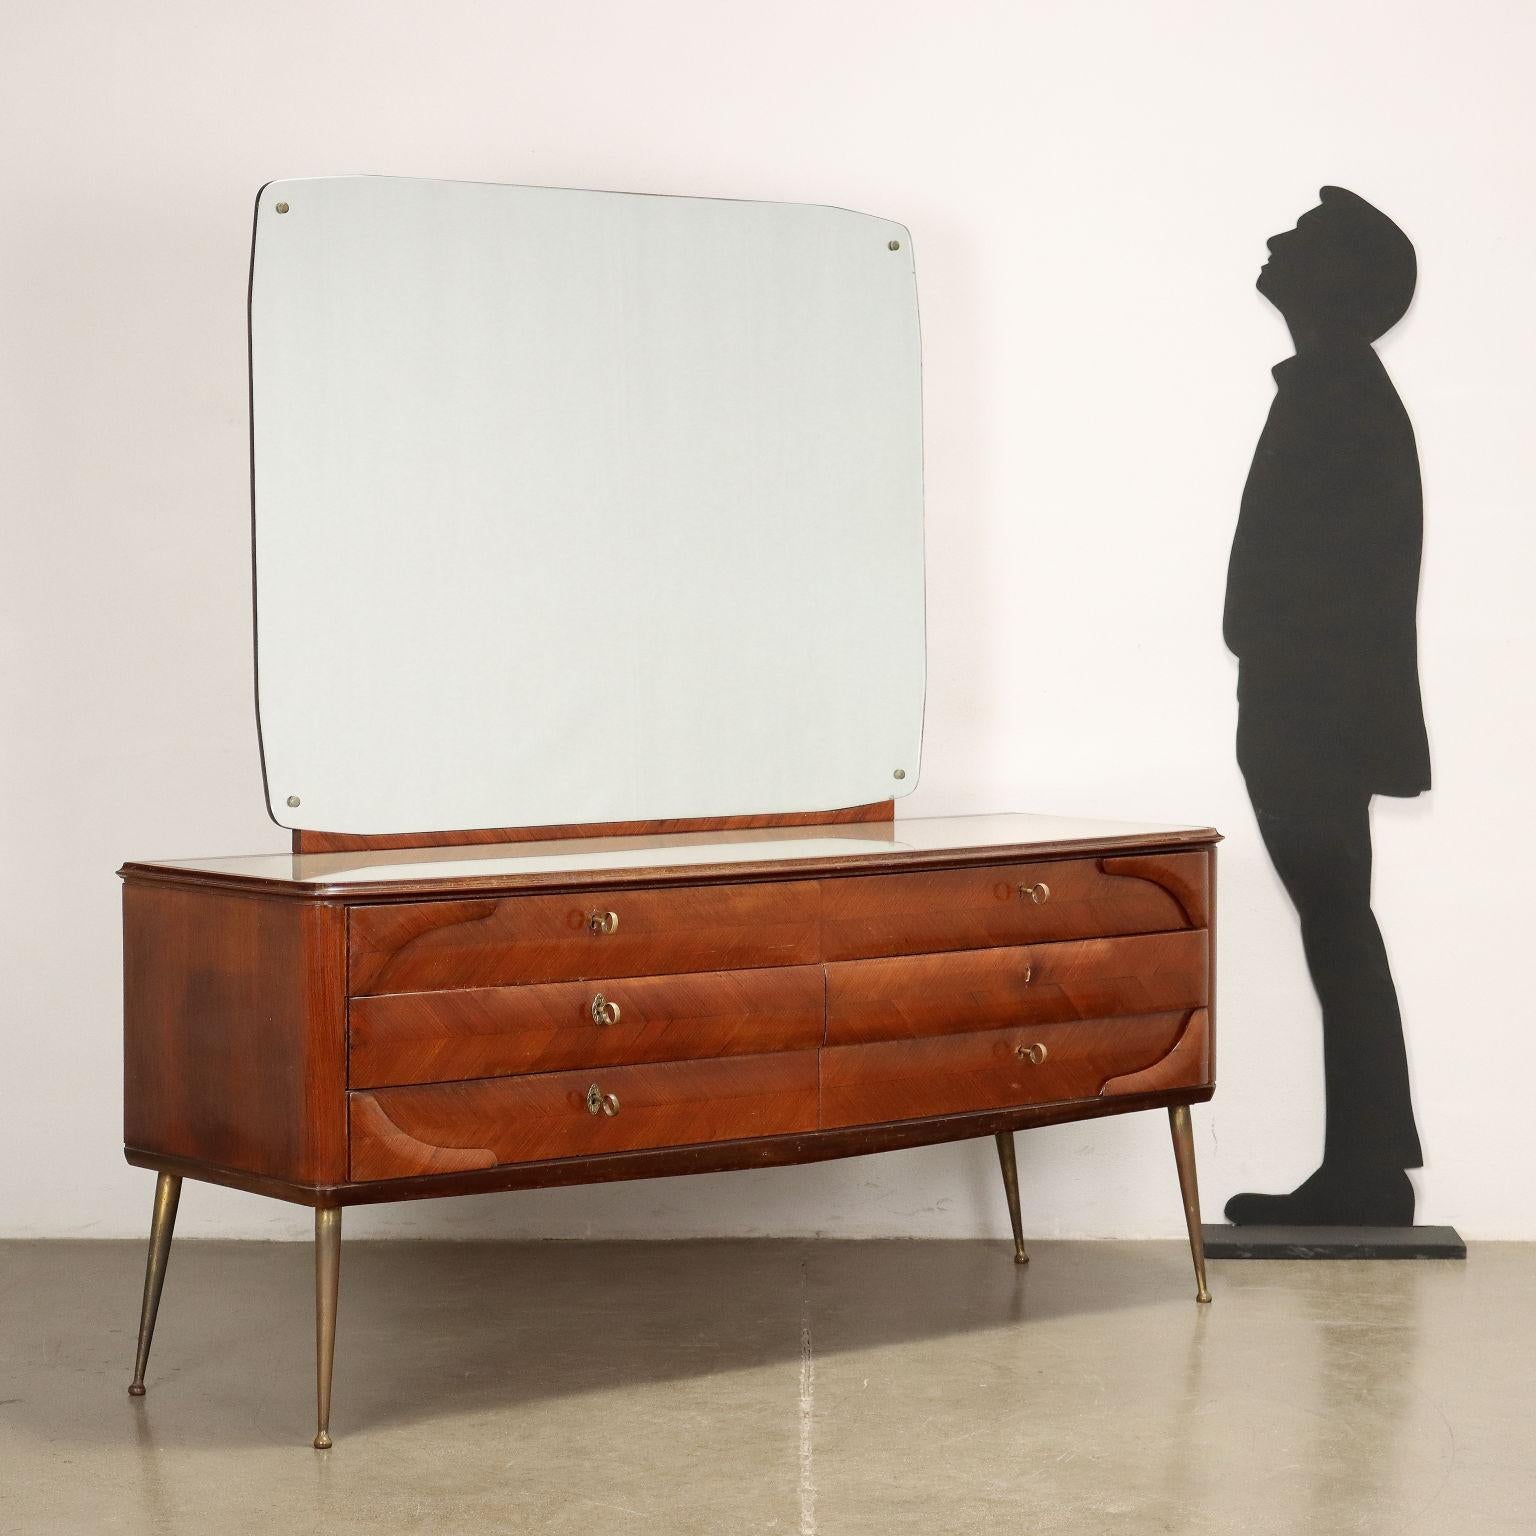 Dresser with mirror; exotic wood veneer, back treated glass top, brass legs.